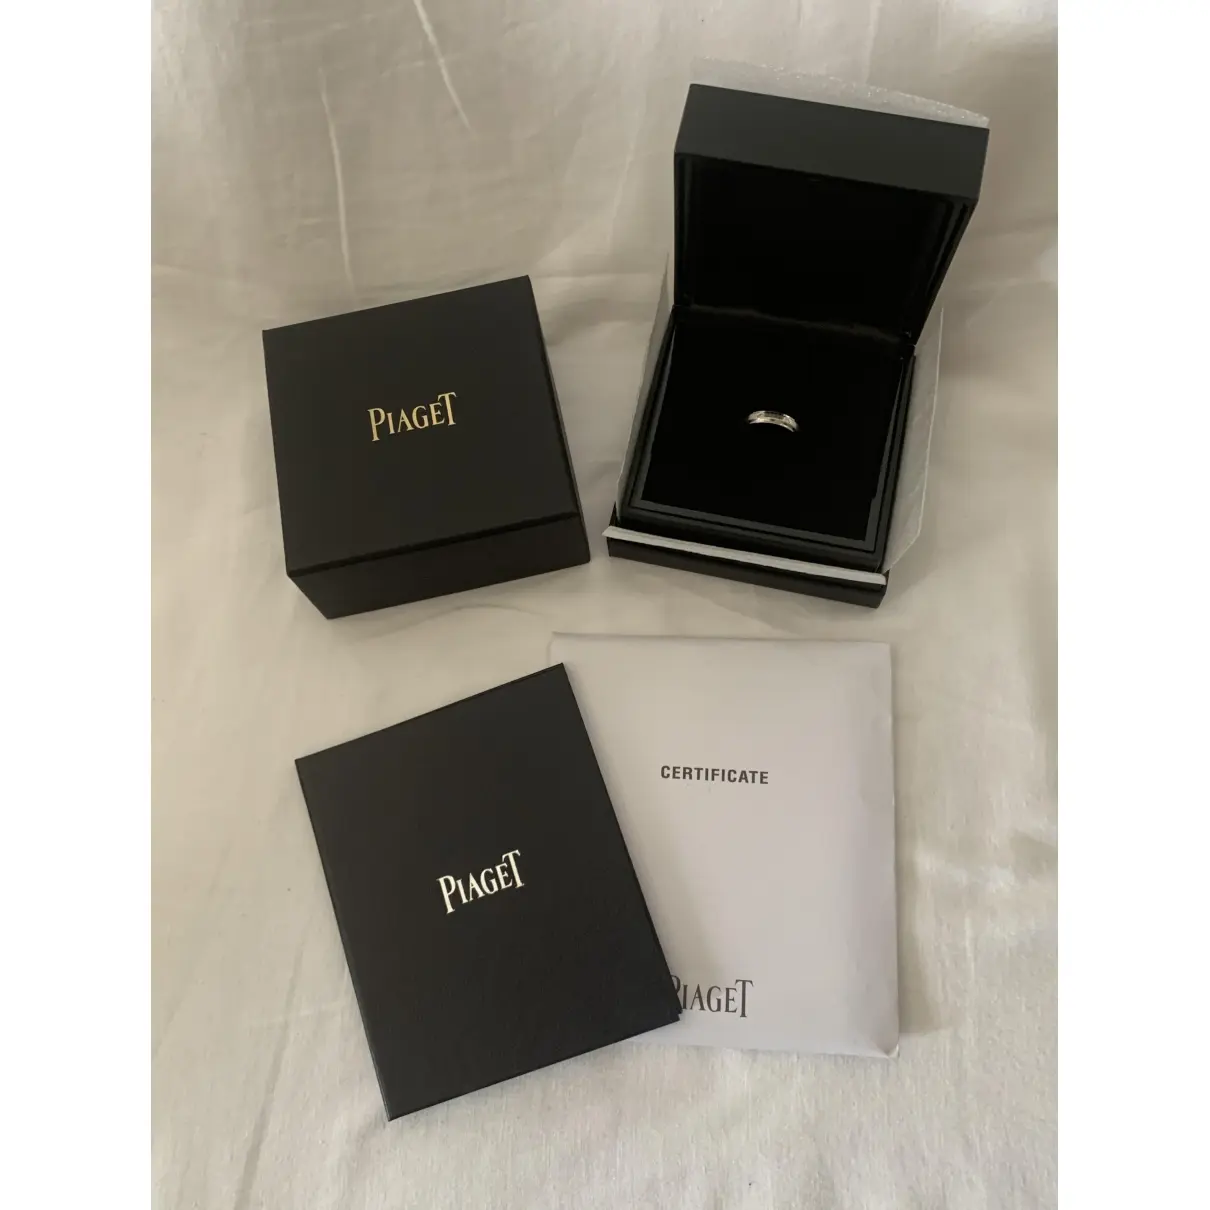 Buy Piaget Possession white gold ring online